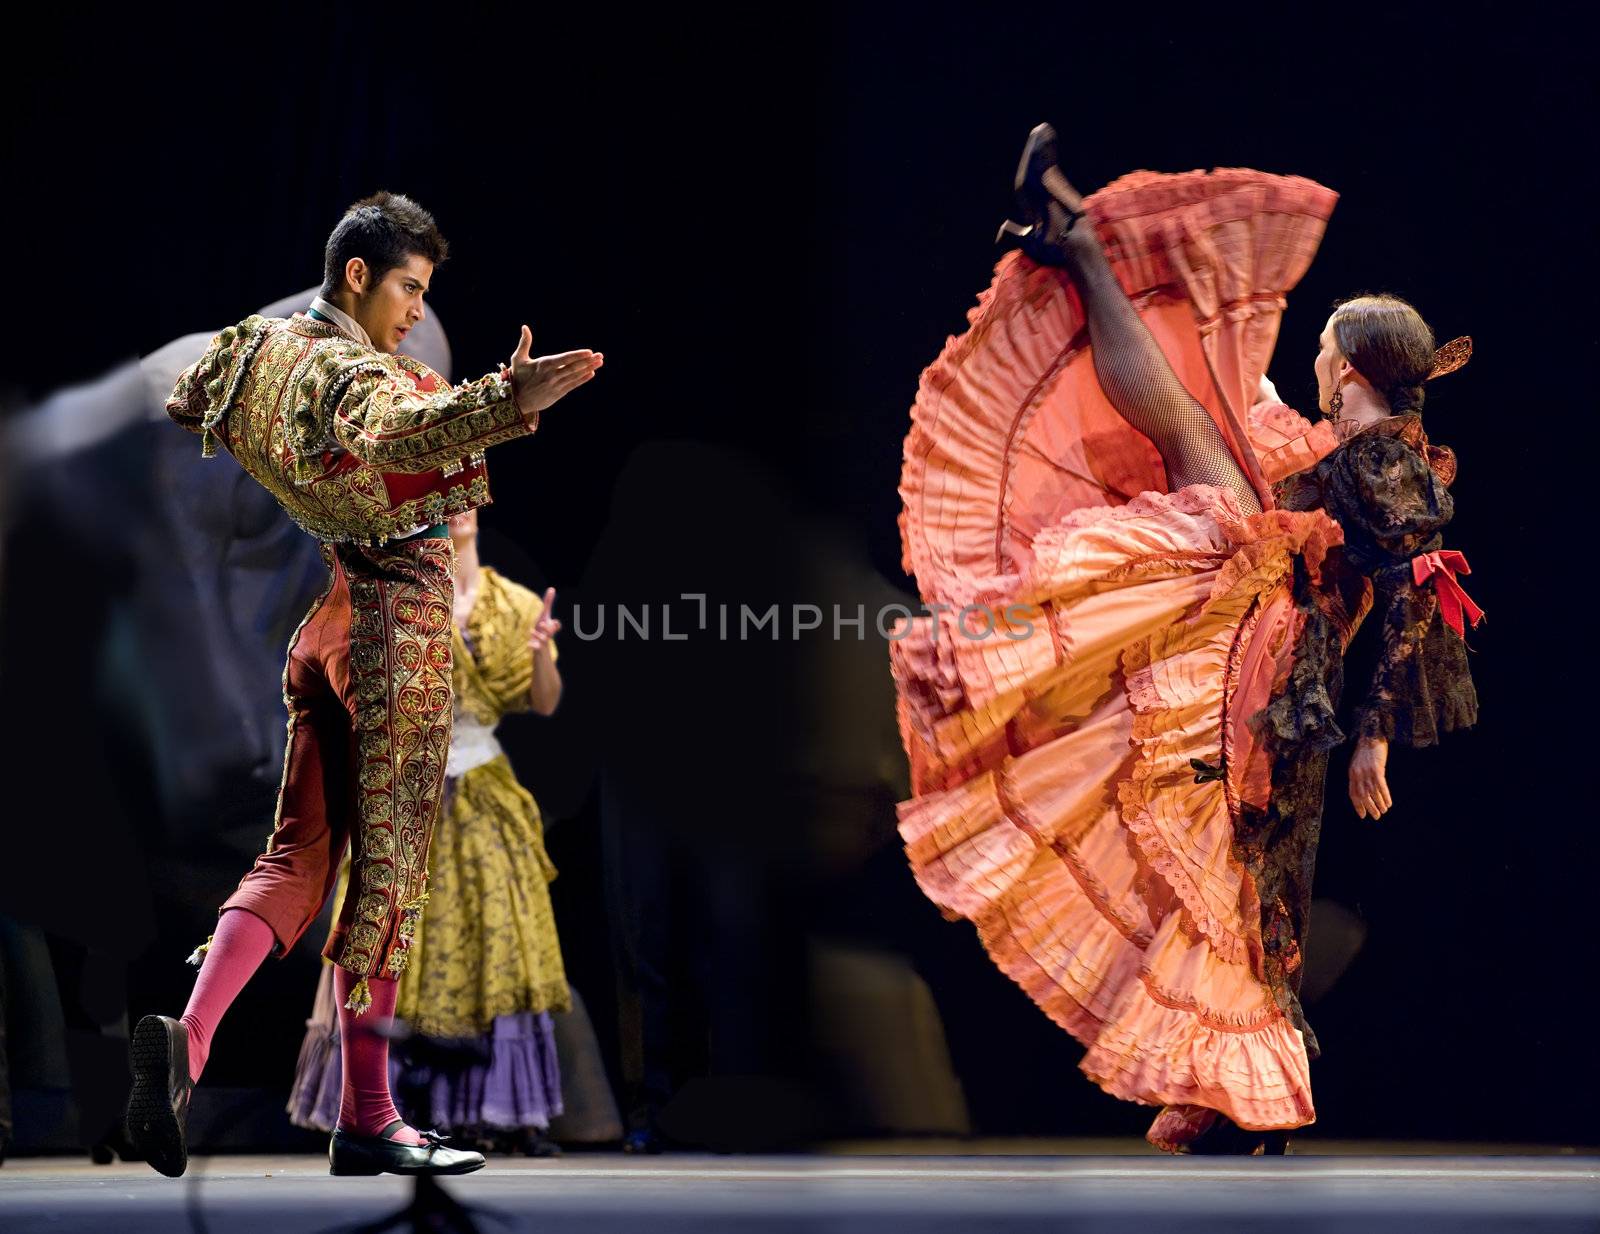 Spanish Flamenco Dancers by jackq